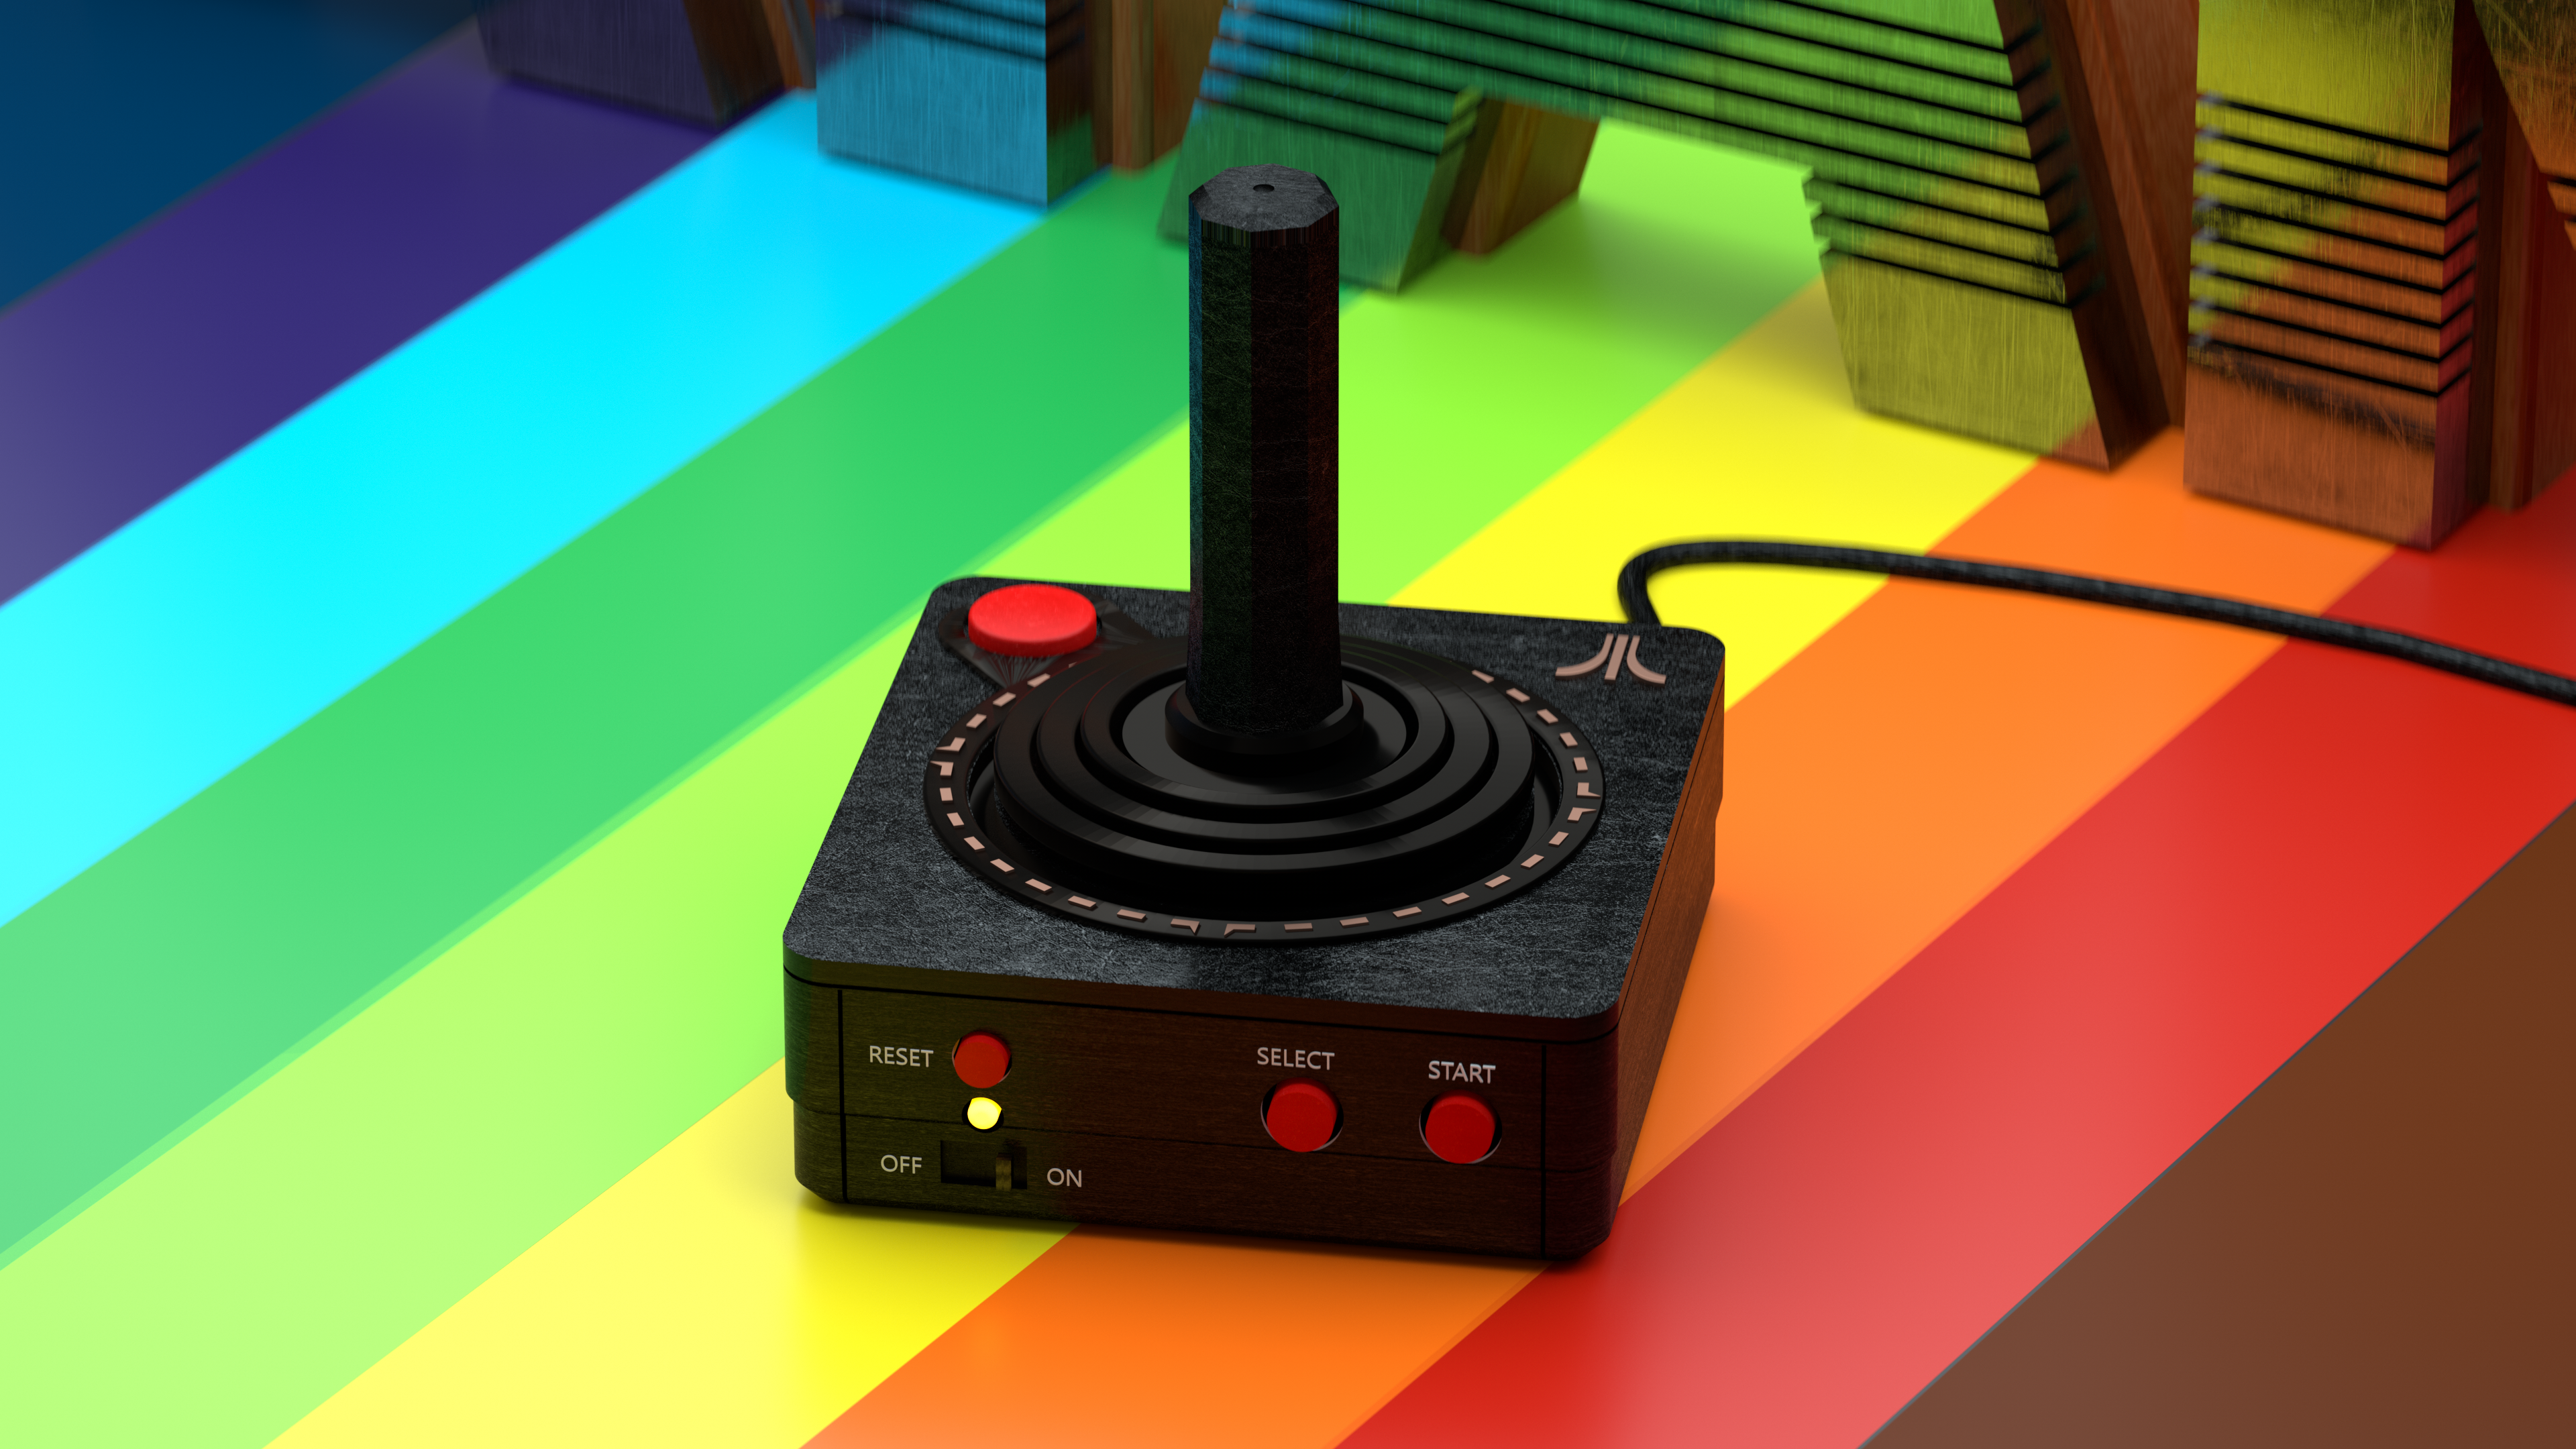 General 3840x2160 Cinema 4D Atari controllers video games joystick retro games buttons spectrum colorful